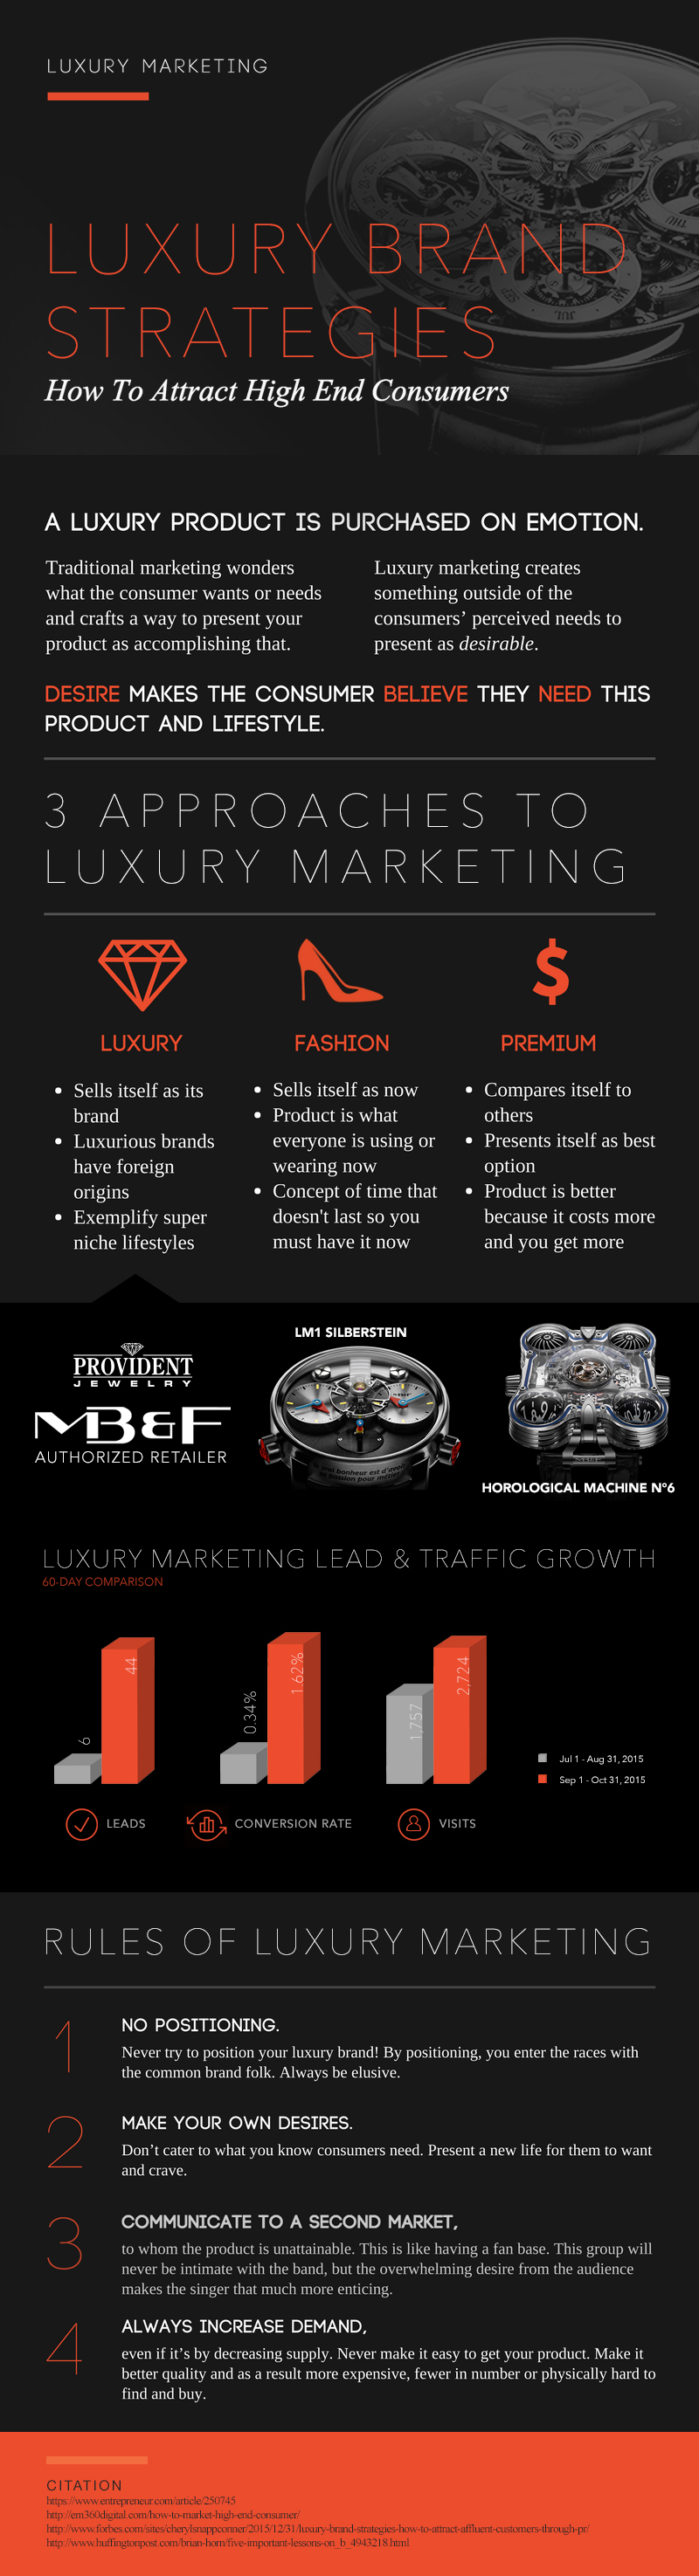 luxury brand marketing